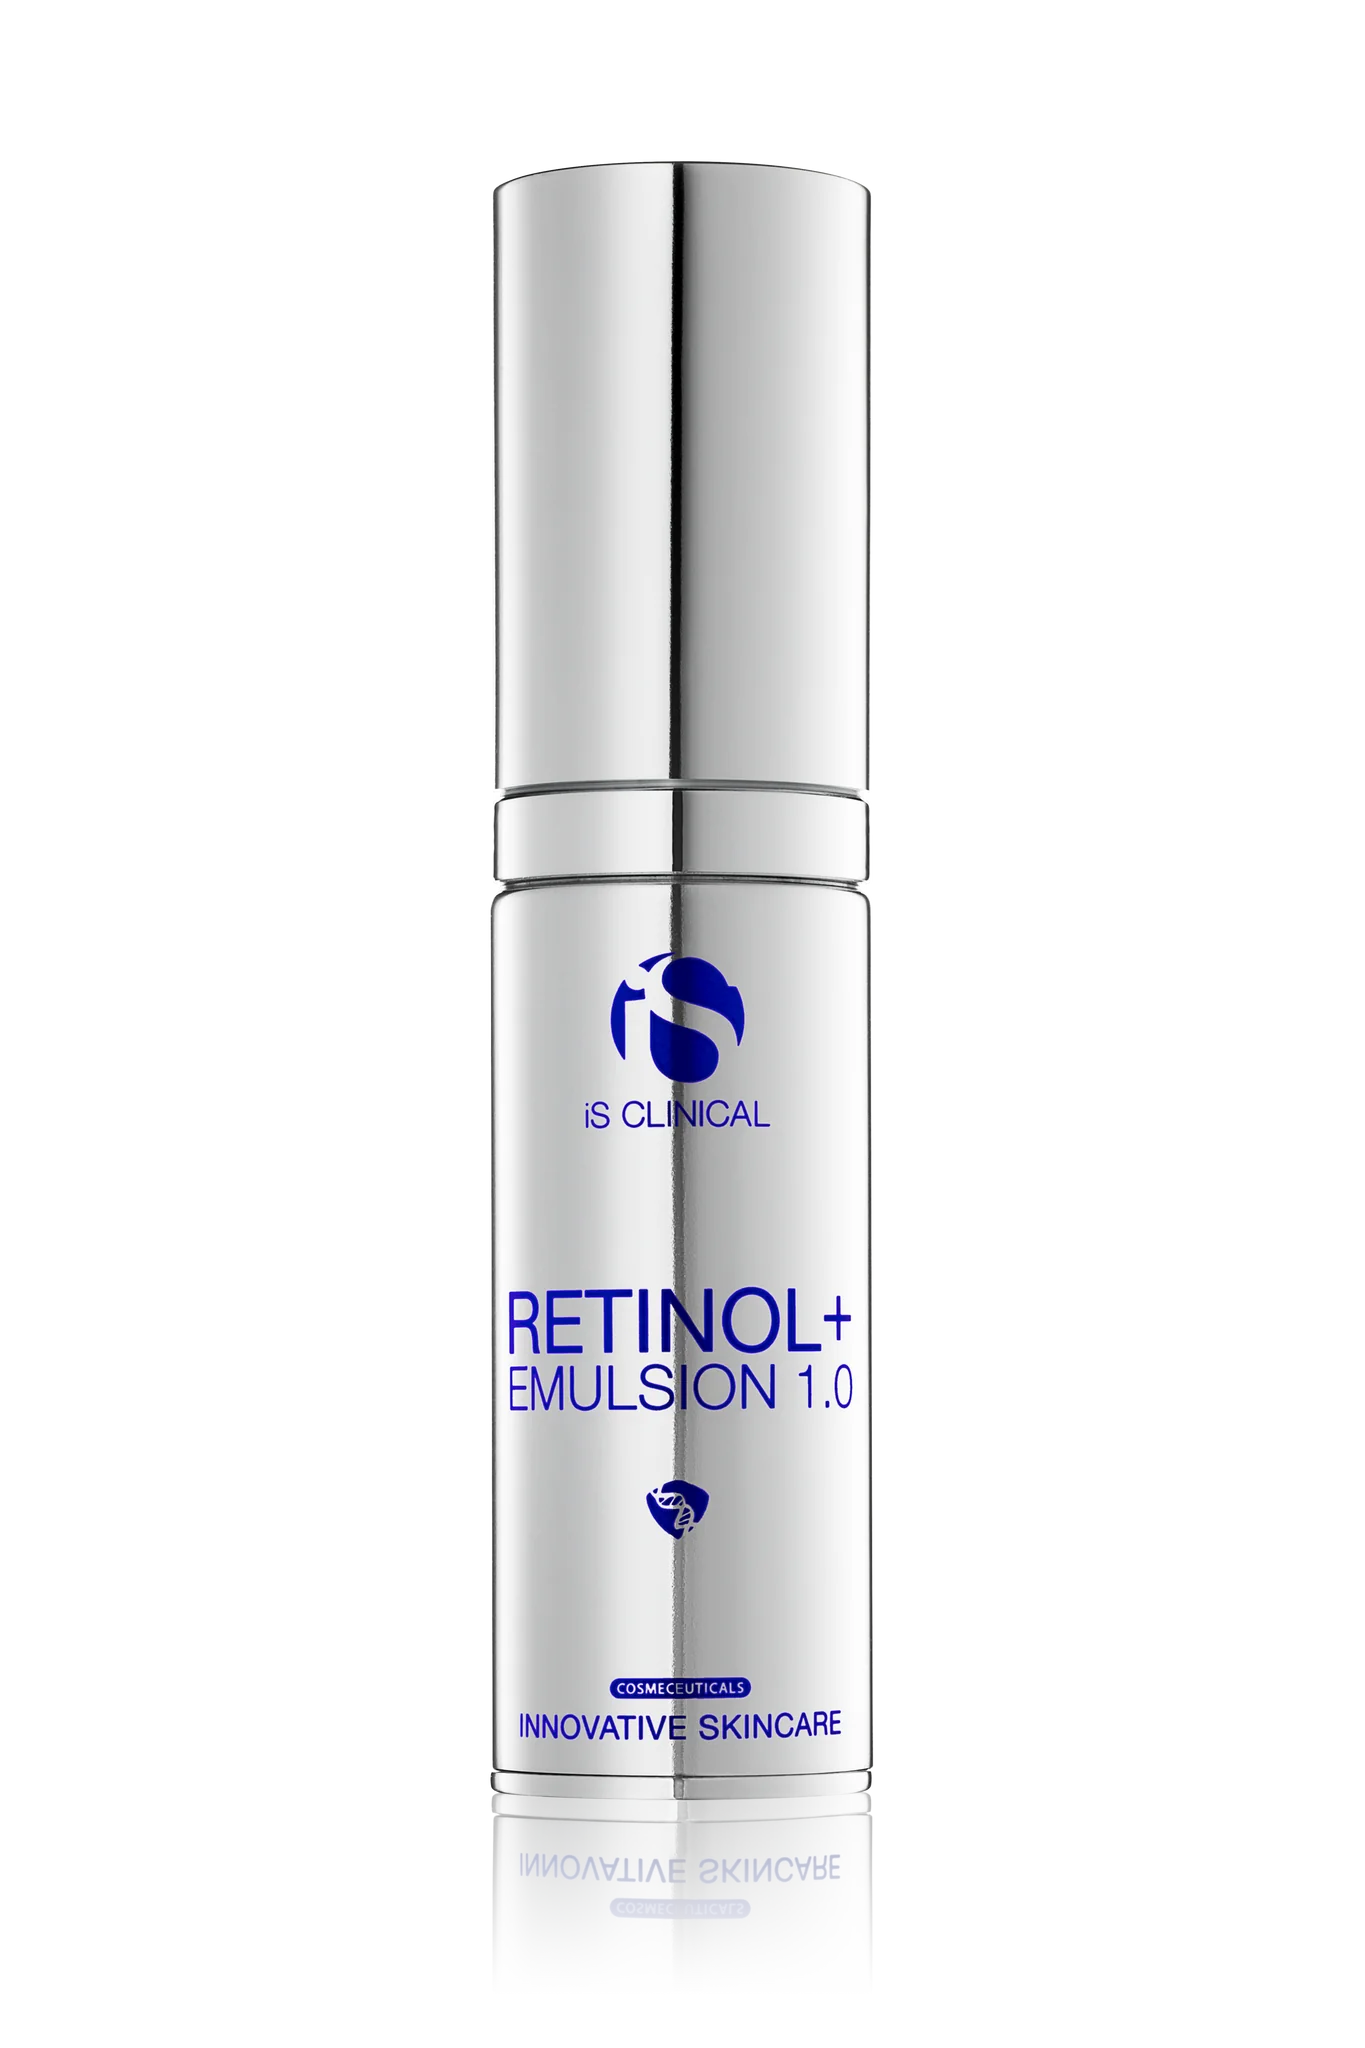 iS Clinical | Retinol + Emulsion 1.0 (30g)